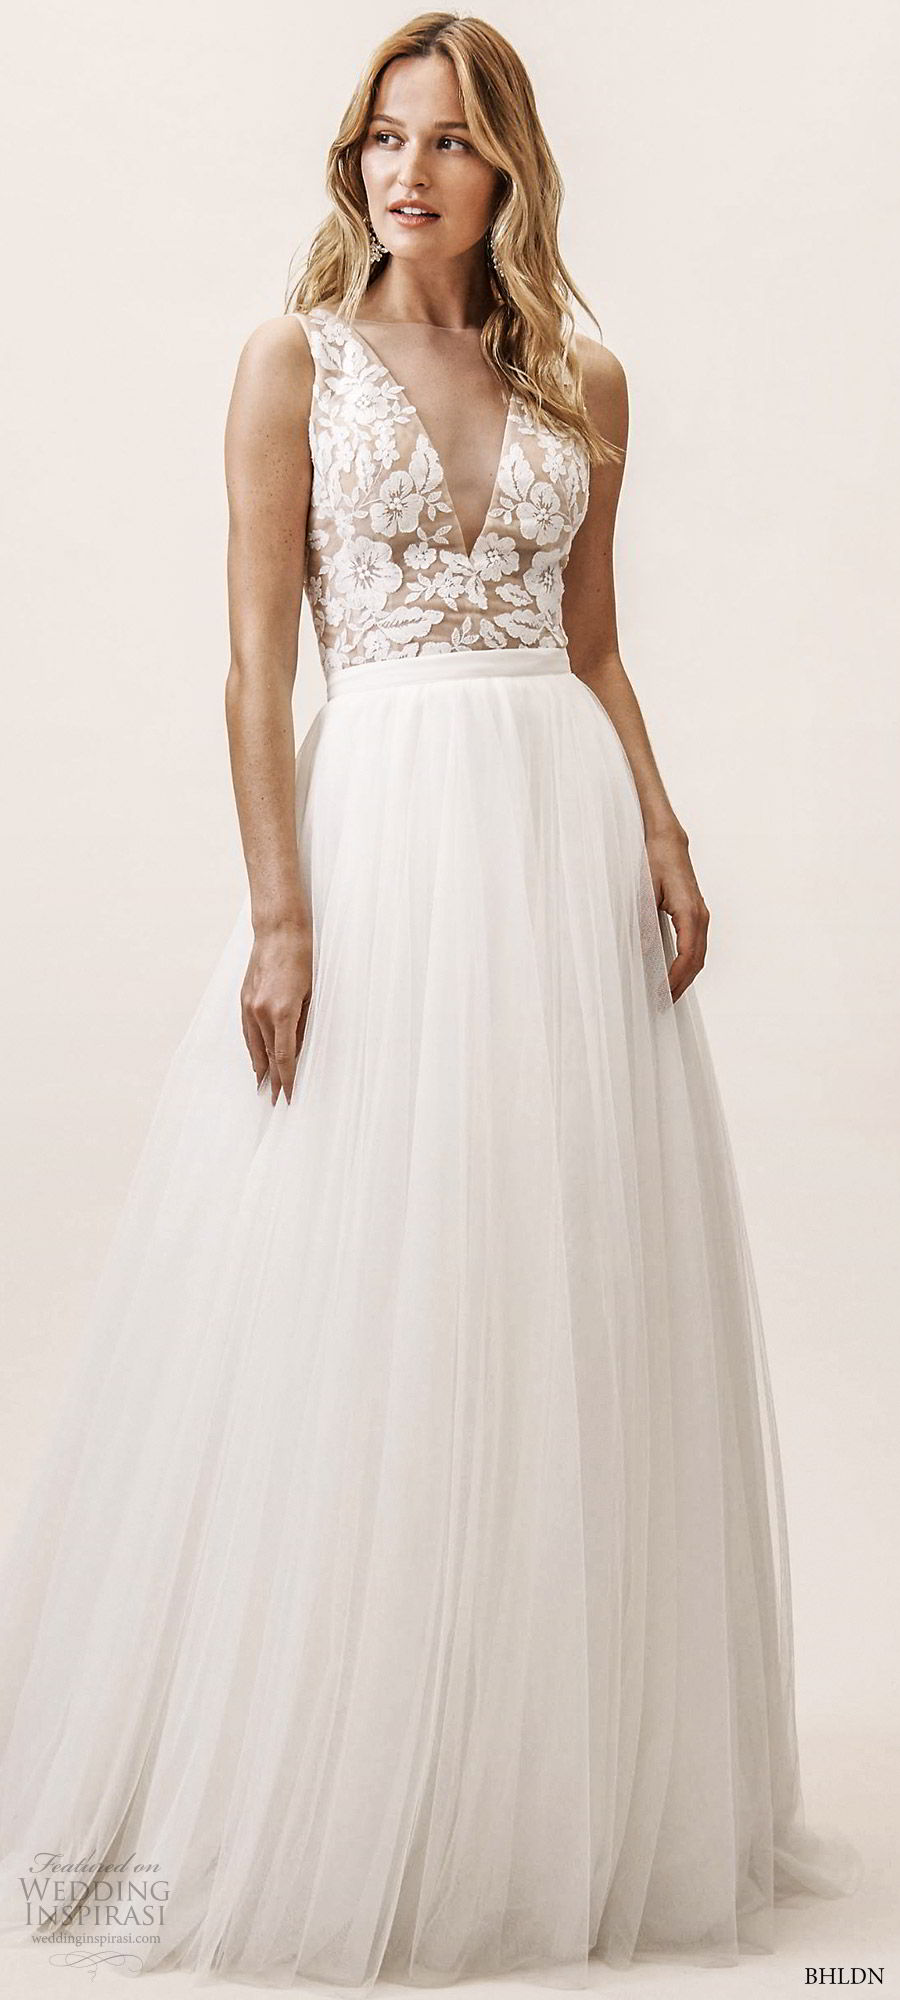 bhldn spring 2019 bridal sleeveless illusion deep v neck sheer lace top a line ball gown skirt 2 piece wedding dress (11) modern romantic mv